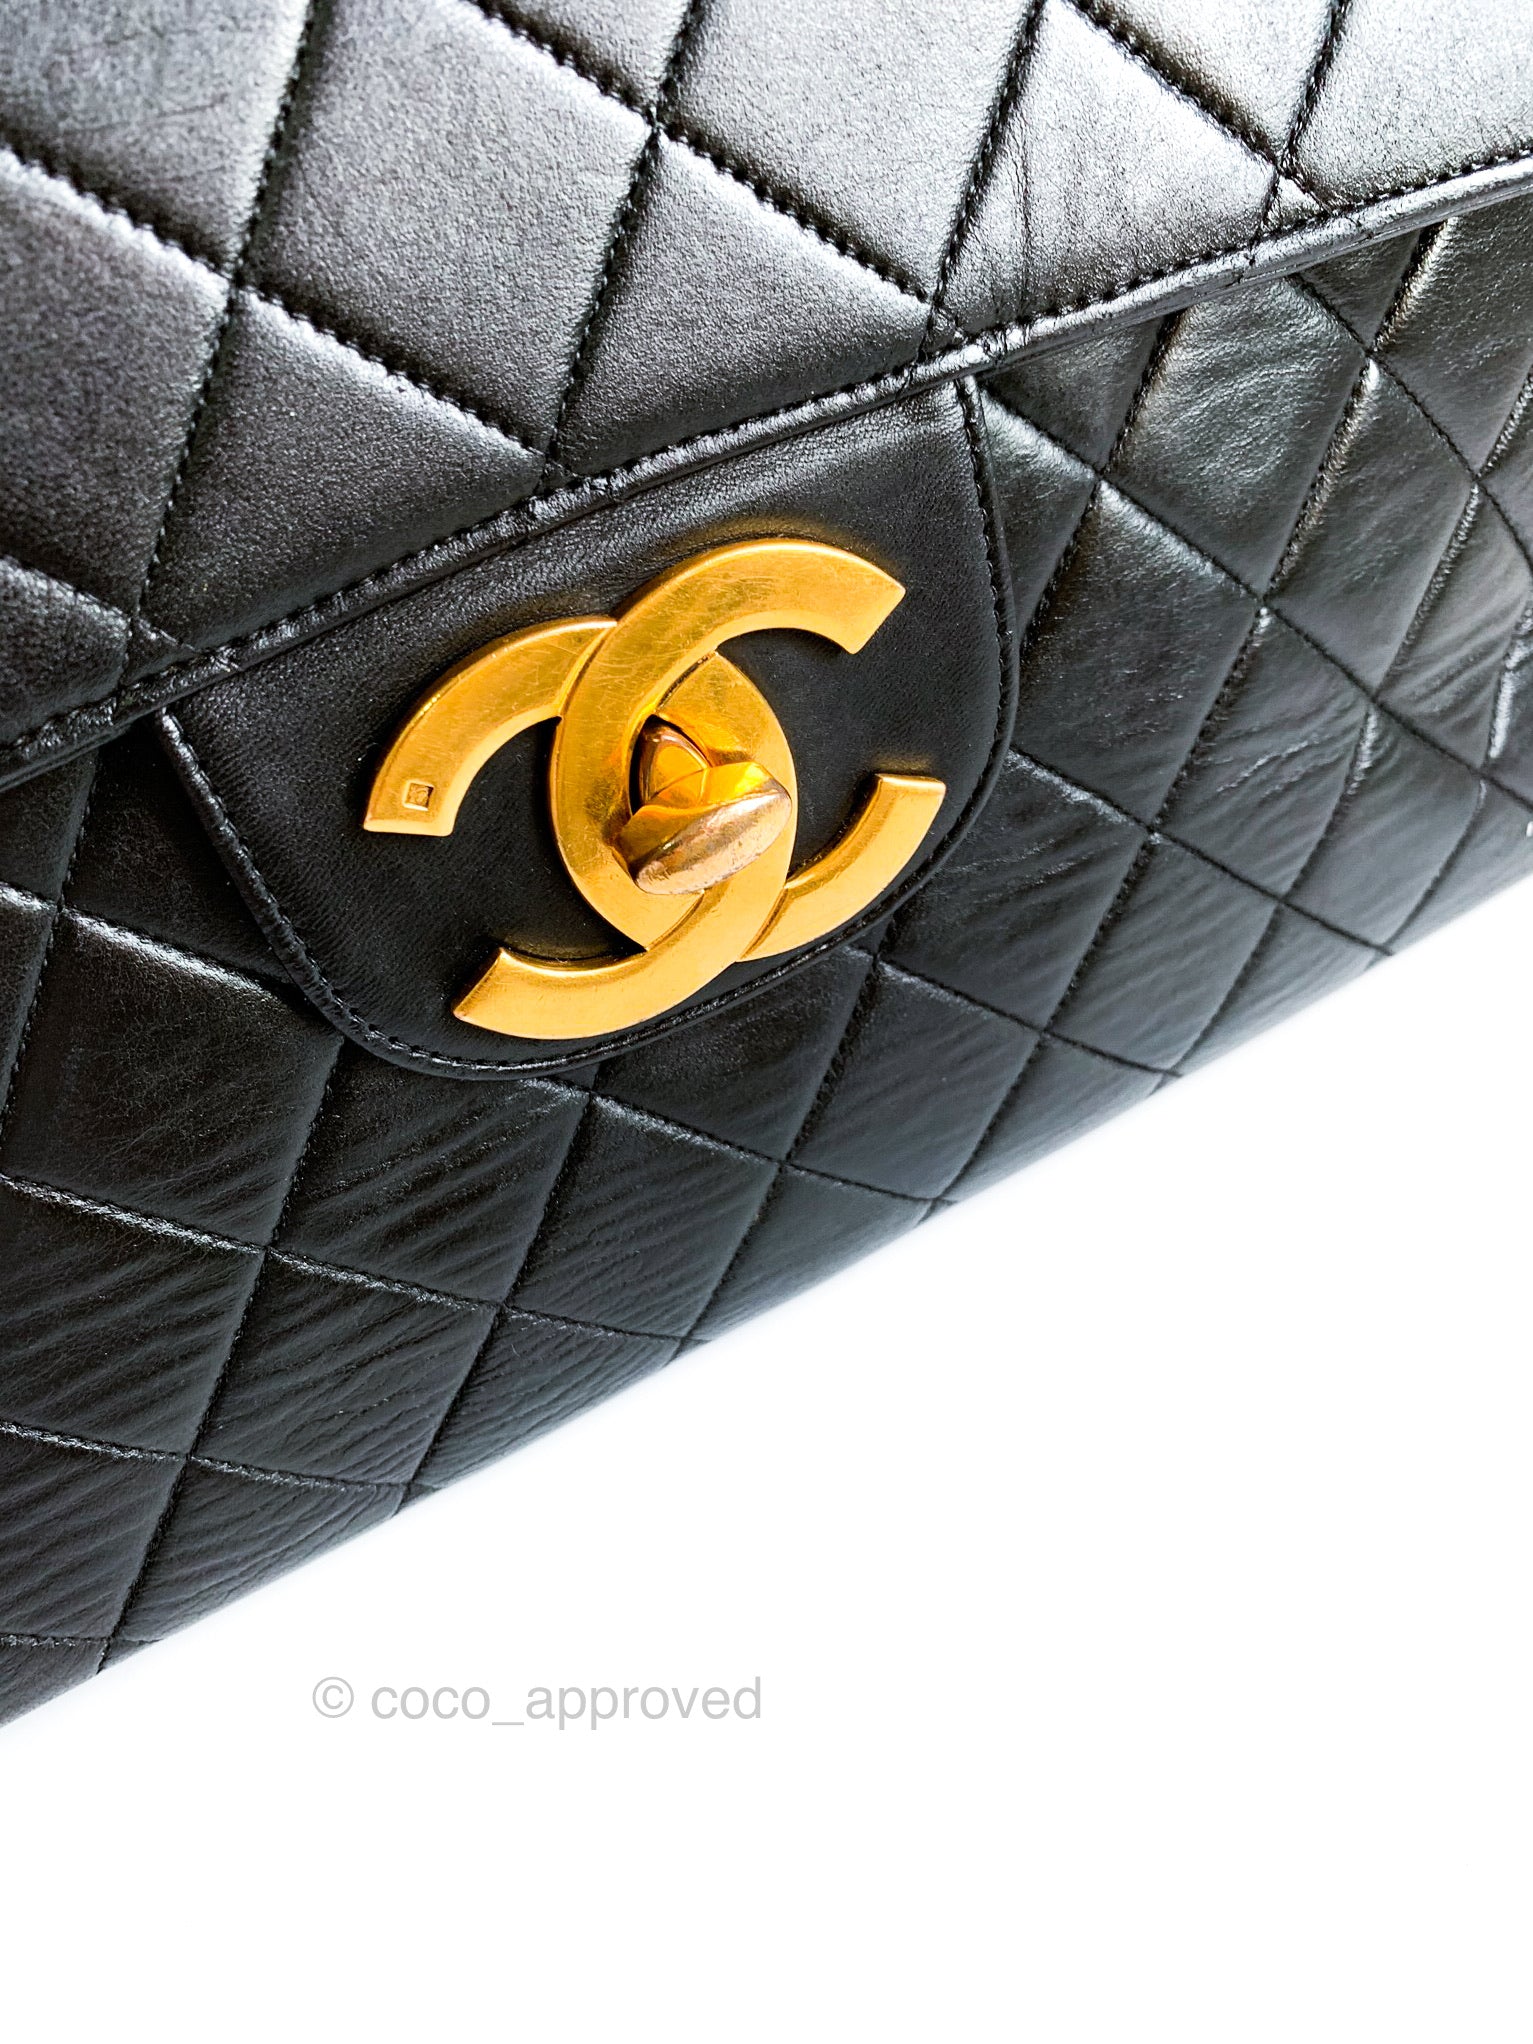 Chanel Vintage XL Jumbo Single Flap Black Lambskin 24K Gold